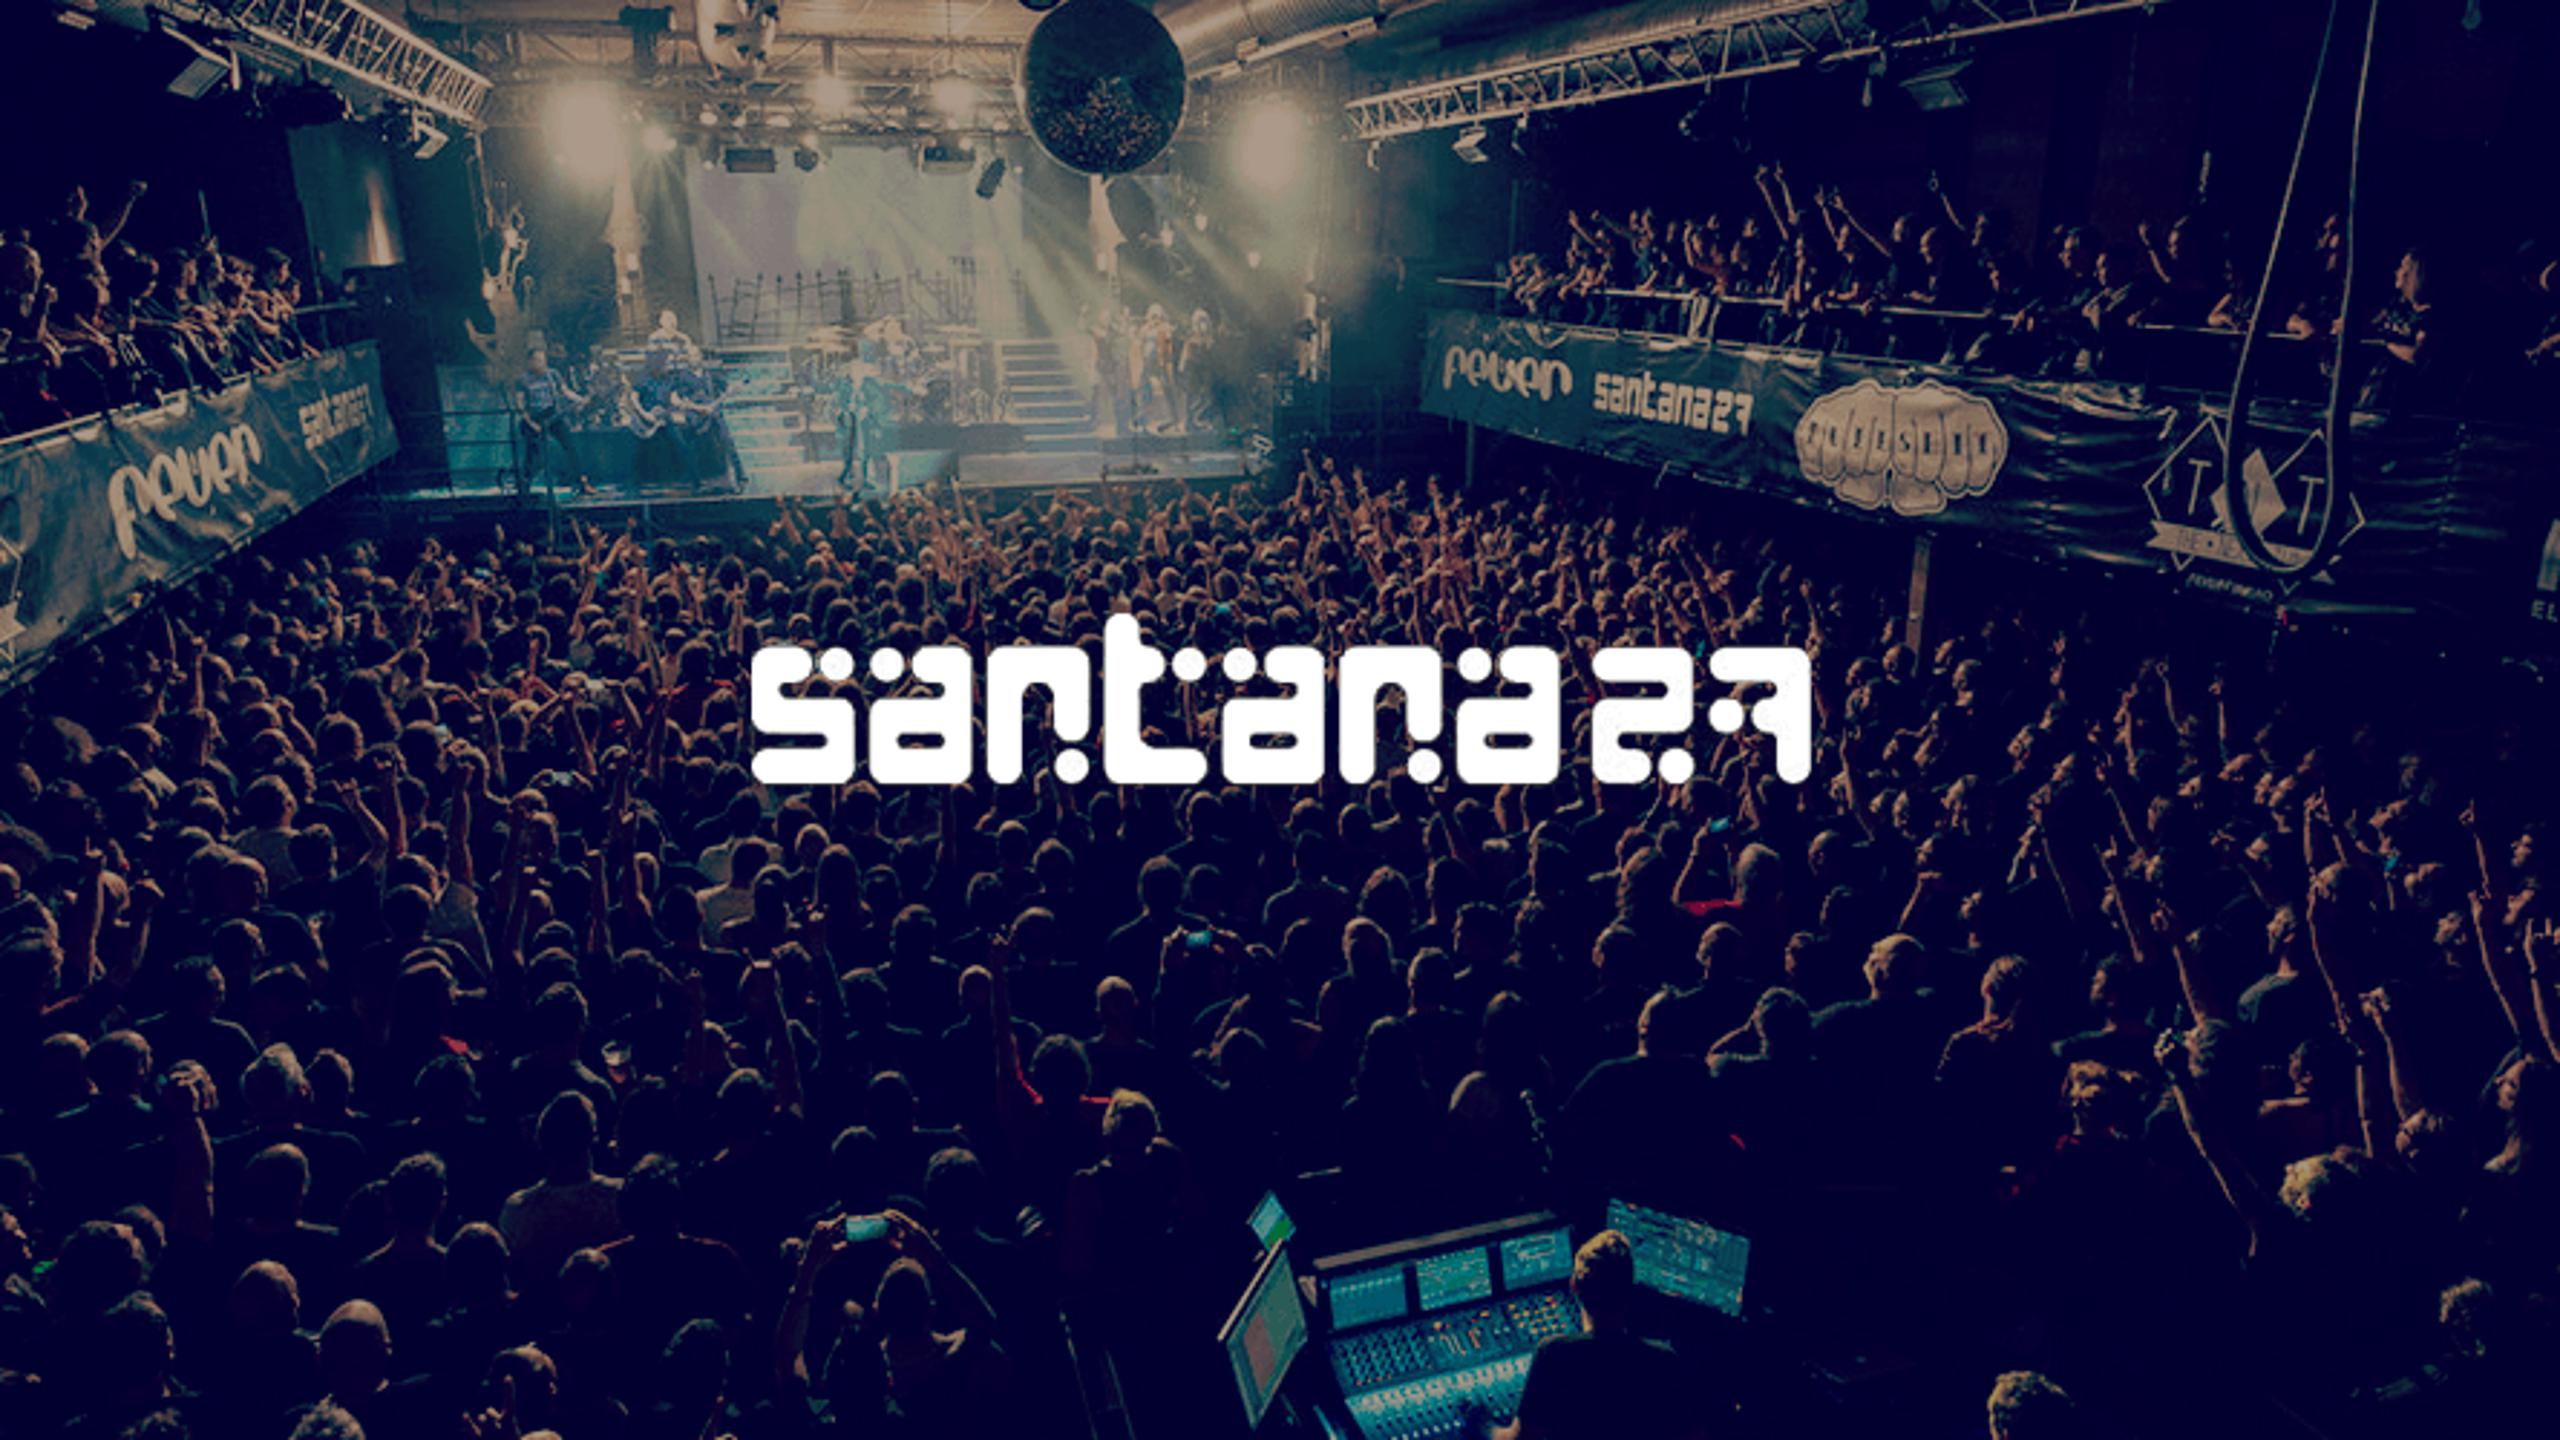 Santana 27, Bilbao, Spain